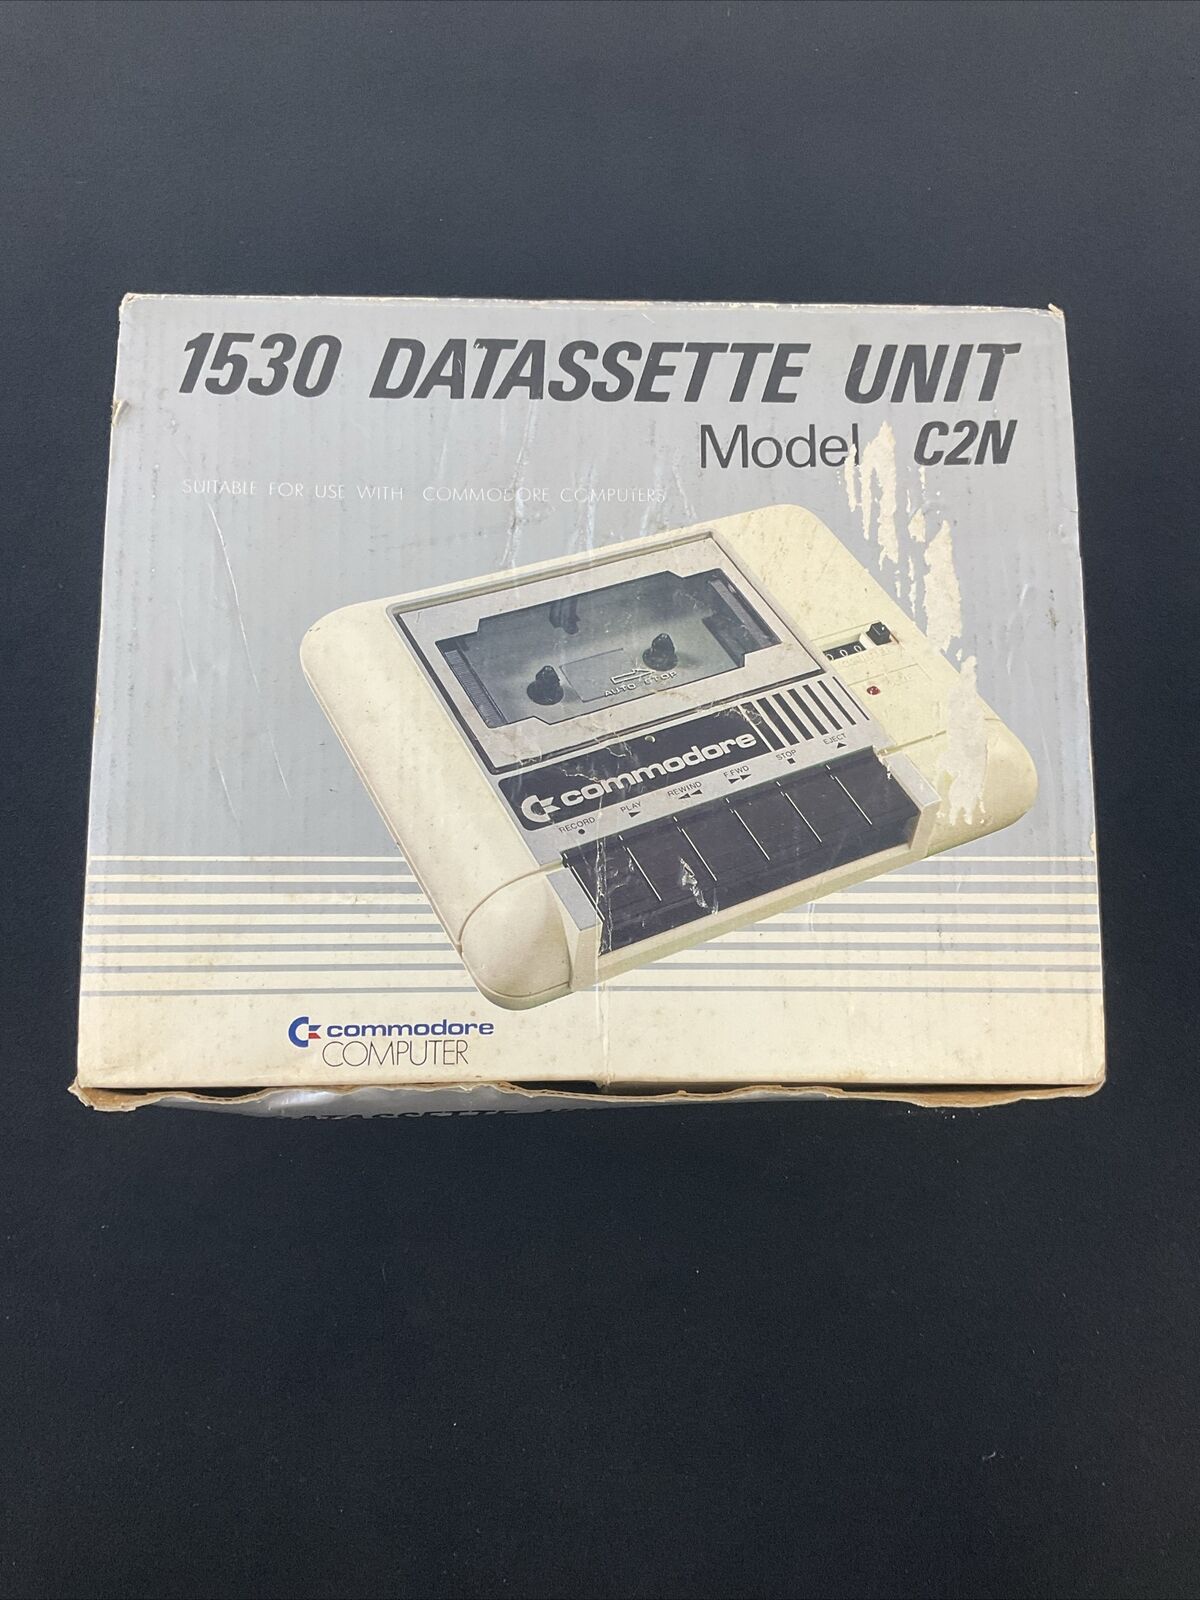 C2N Datassette Unit Model 1530 Commodore Computer  UNTESTED